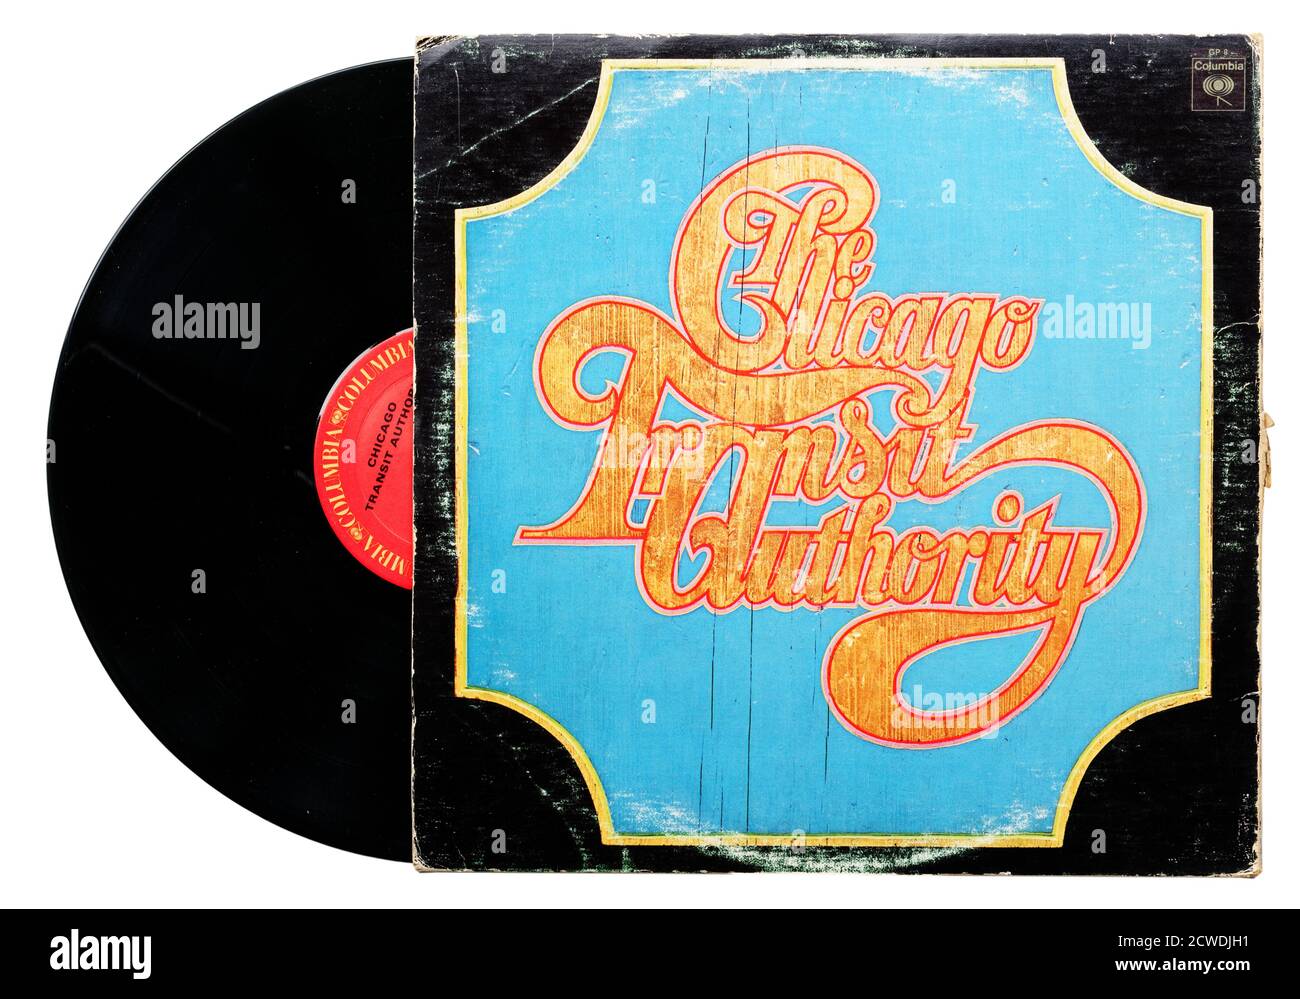 Chicago Transit Authority debut album Stock Photo